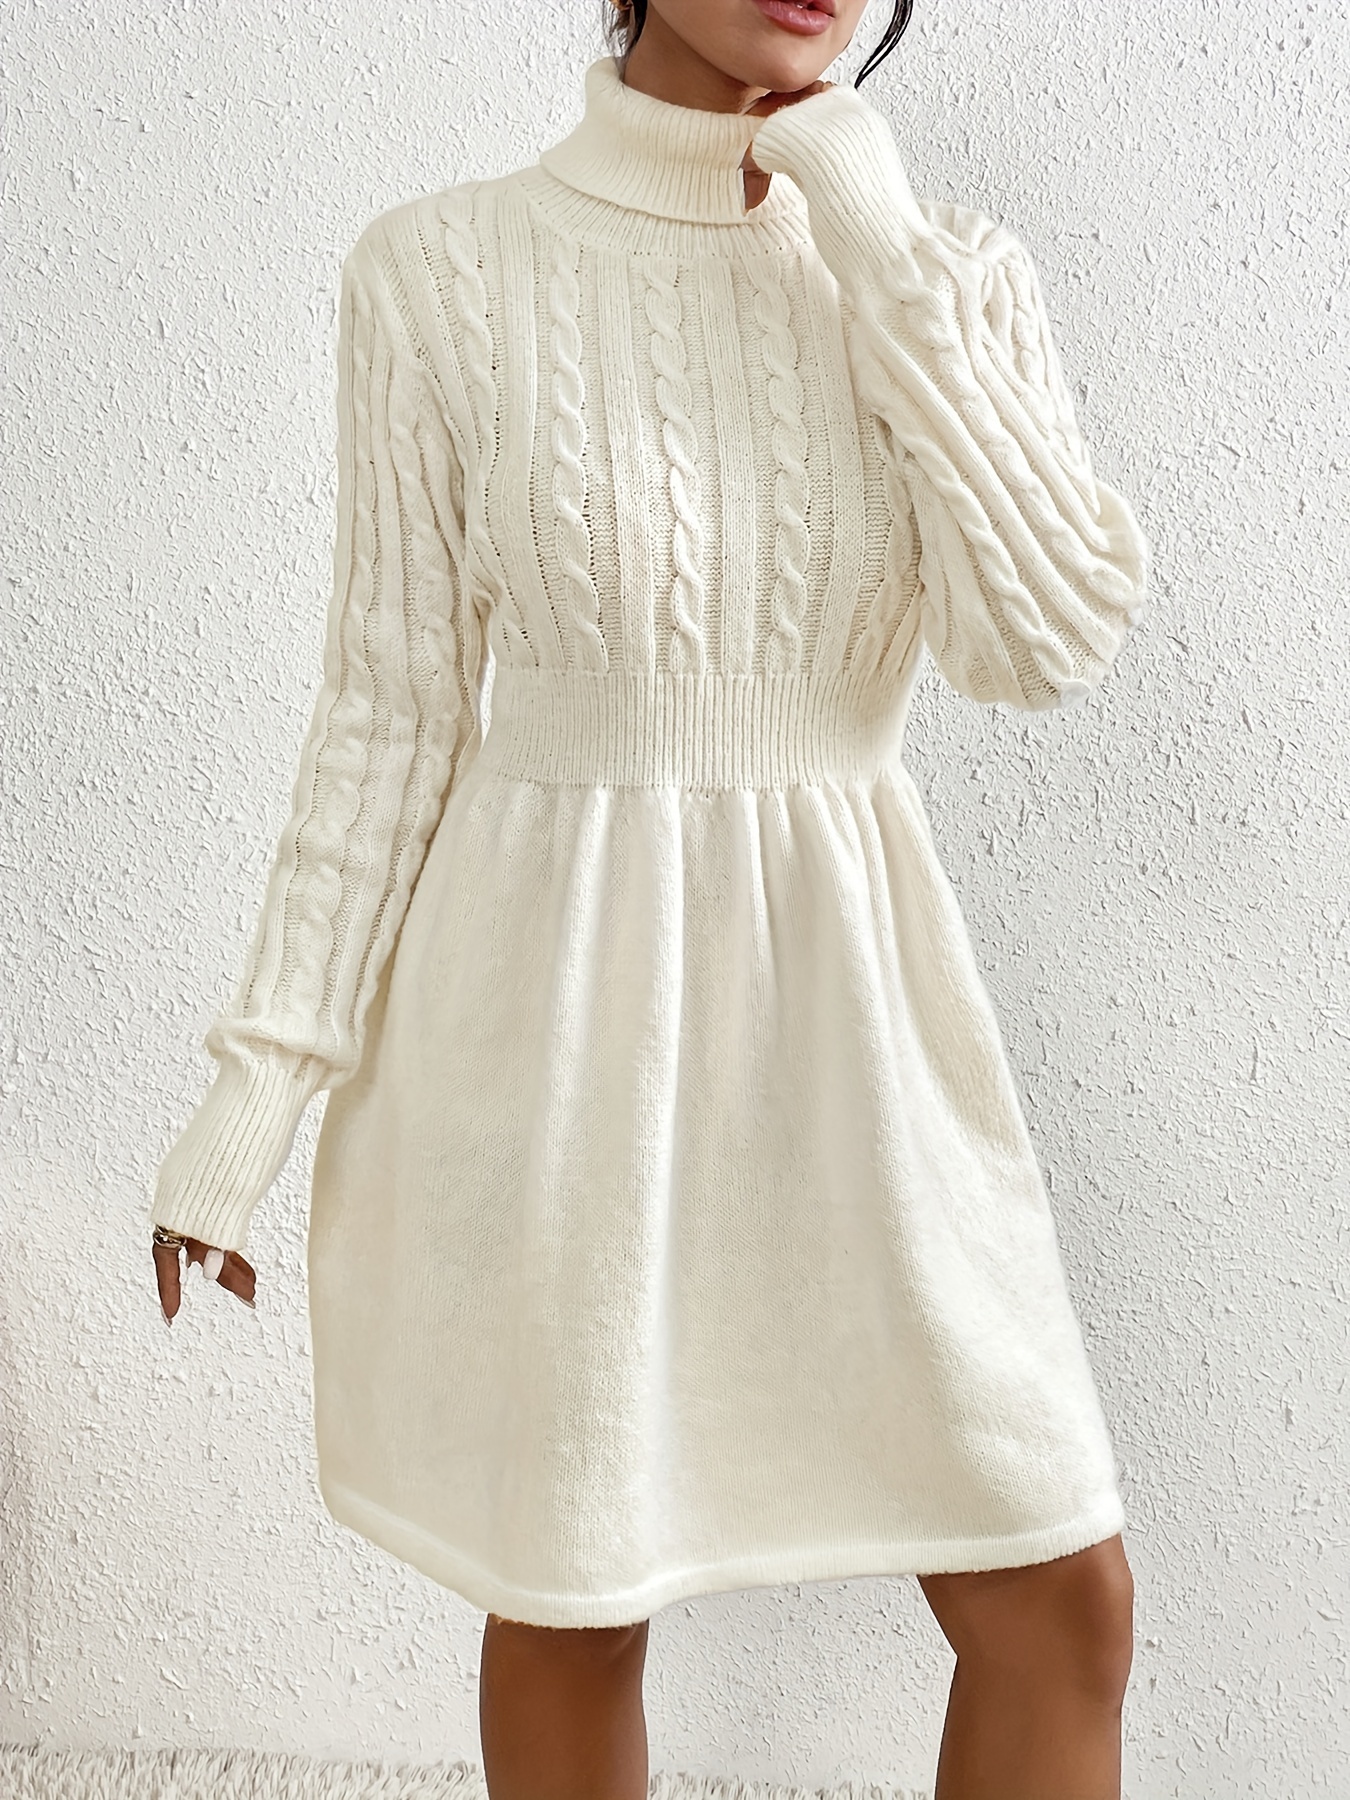 cable knit sweater dress elegant turtleneck long sleeve dress womens clothing details 5